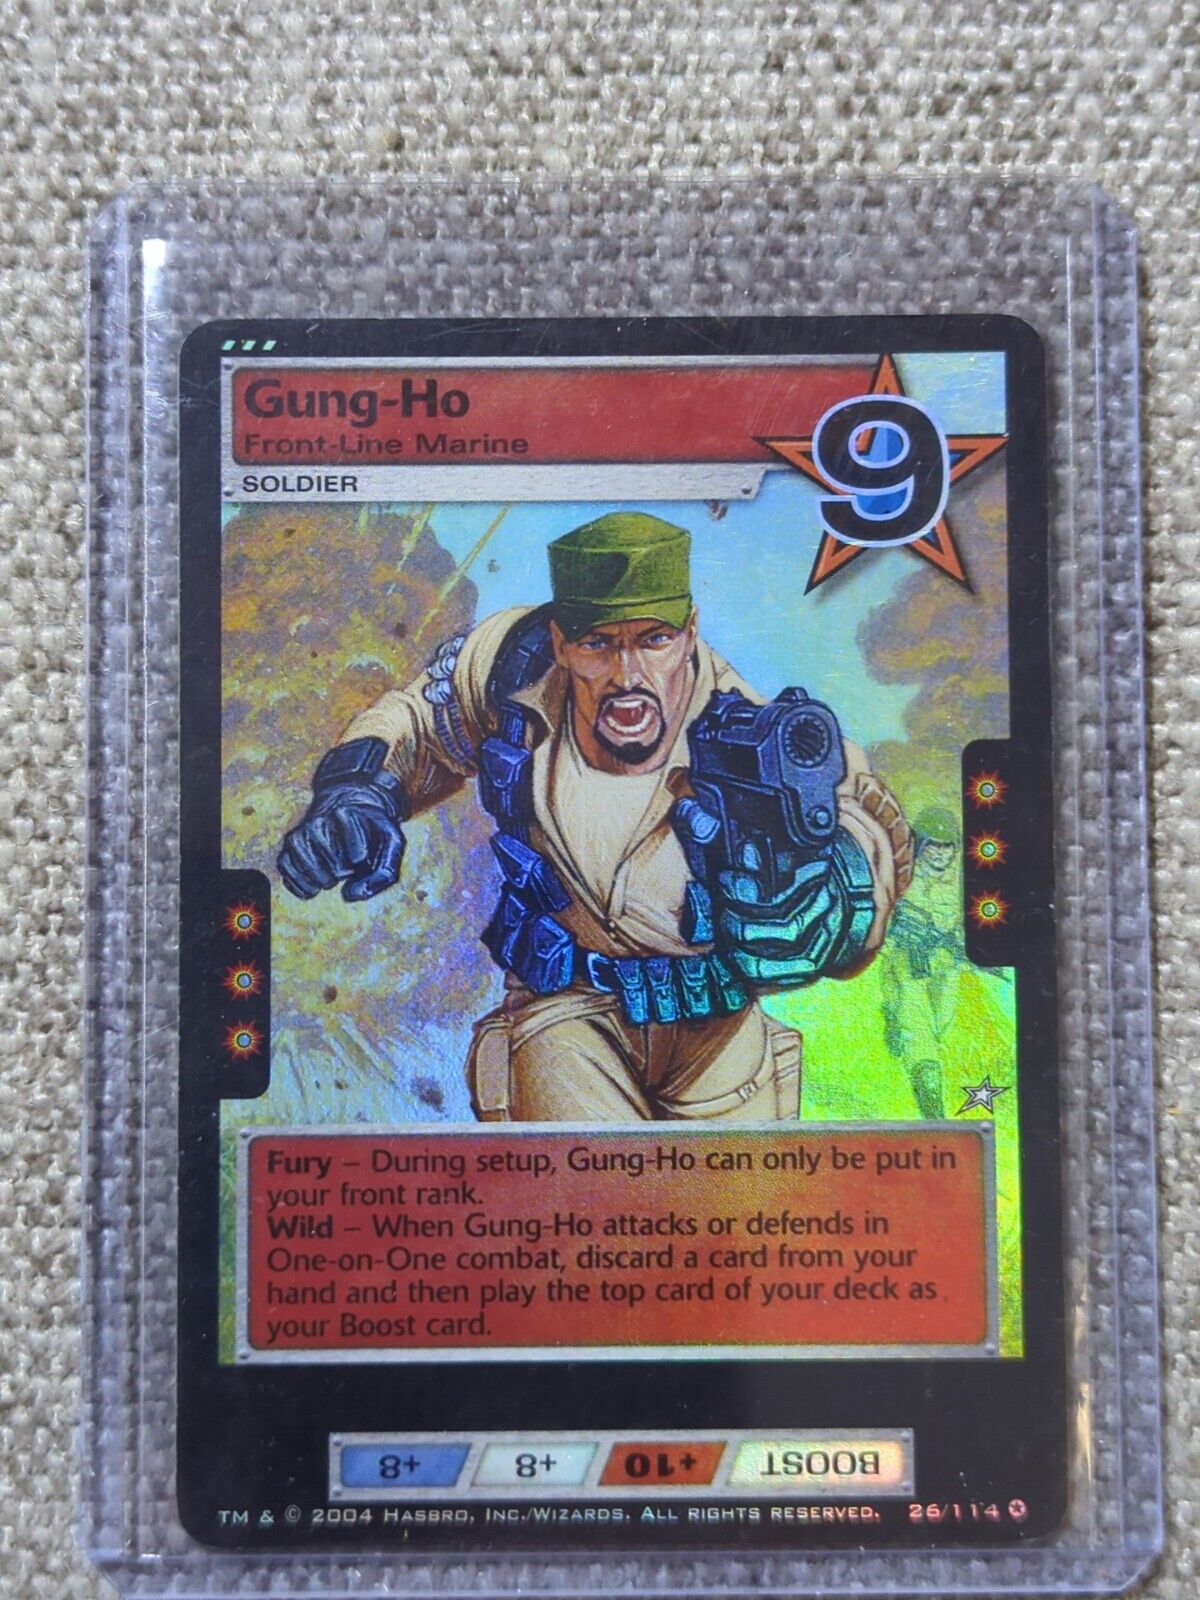 G.I. JOE Hasbro 2004 Gung-Ho Front Line Marine Foil Card #26/114